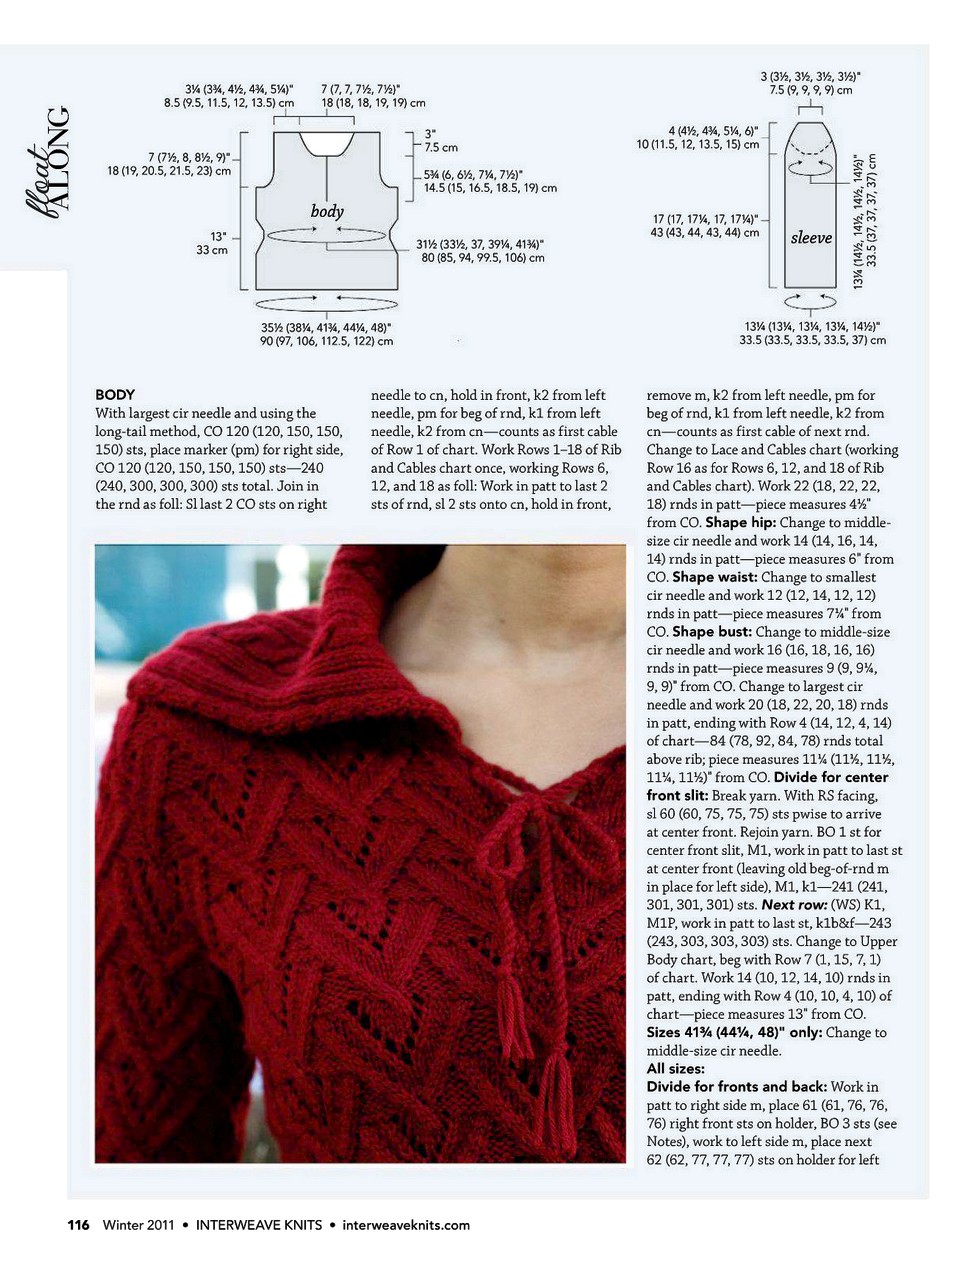 interweave-knits-winter-11-118